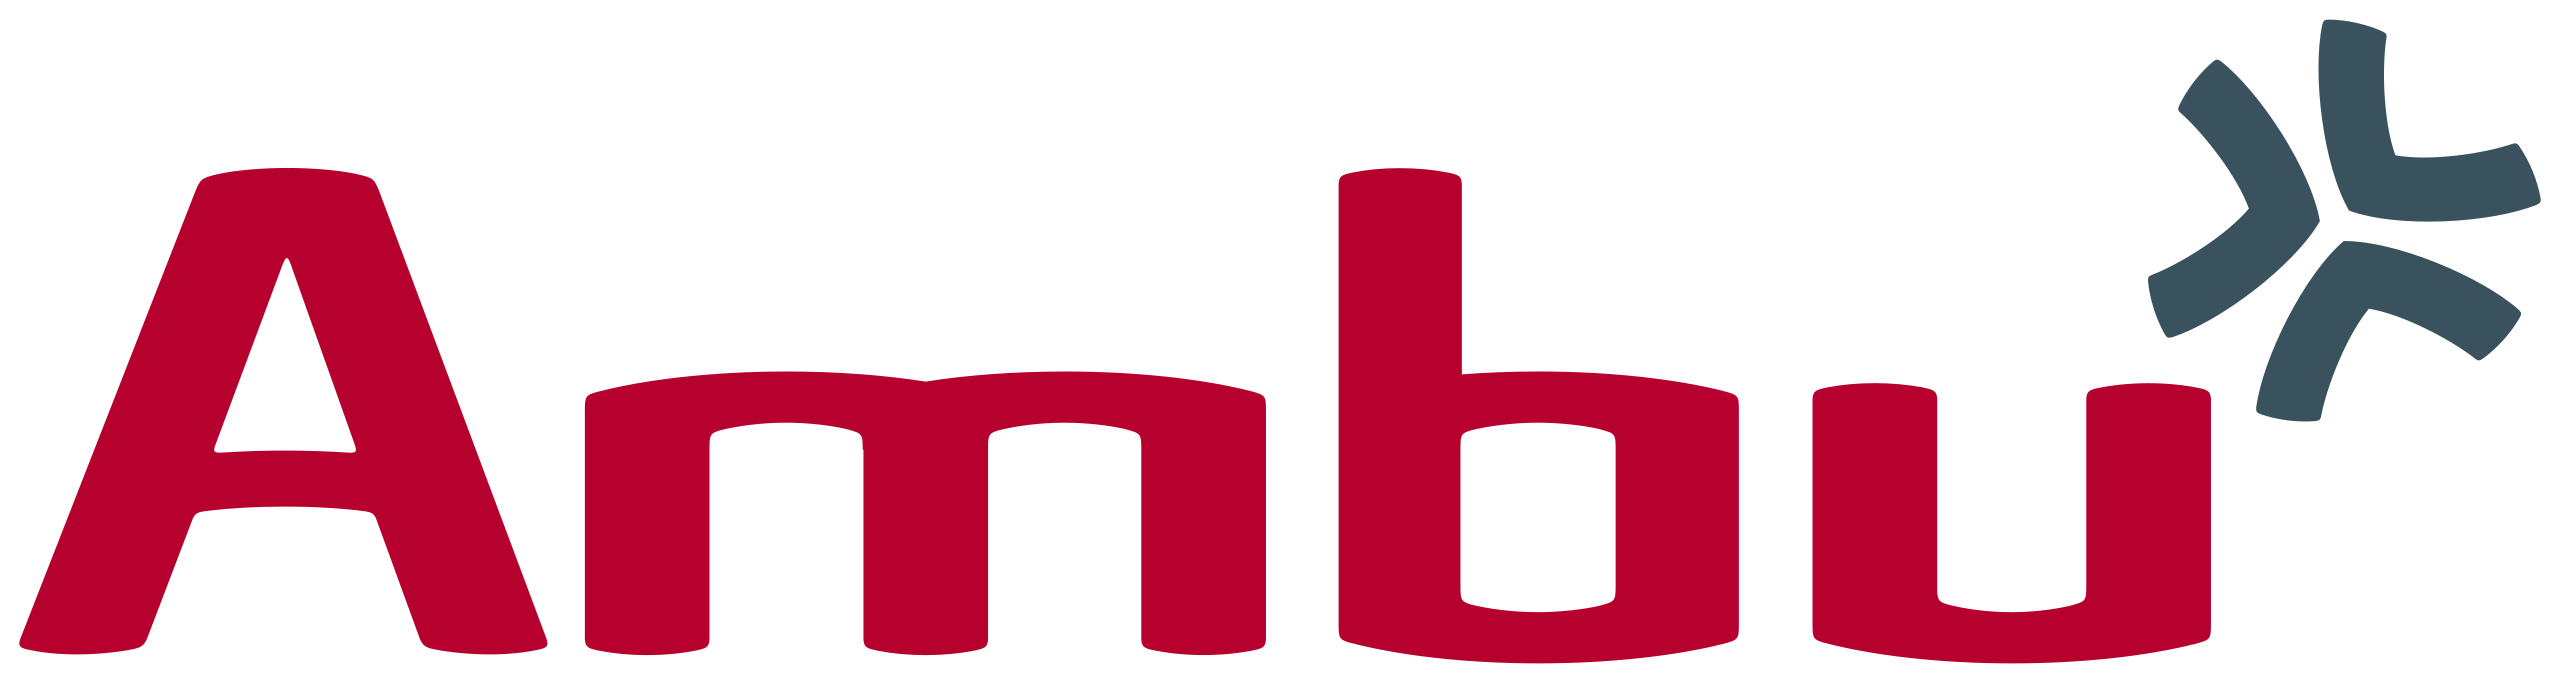 Ambu_logo.svg